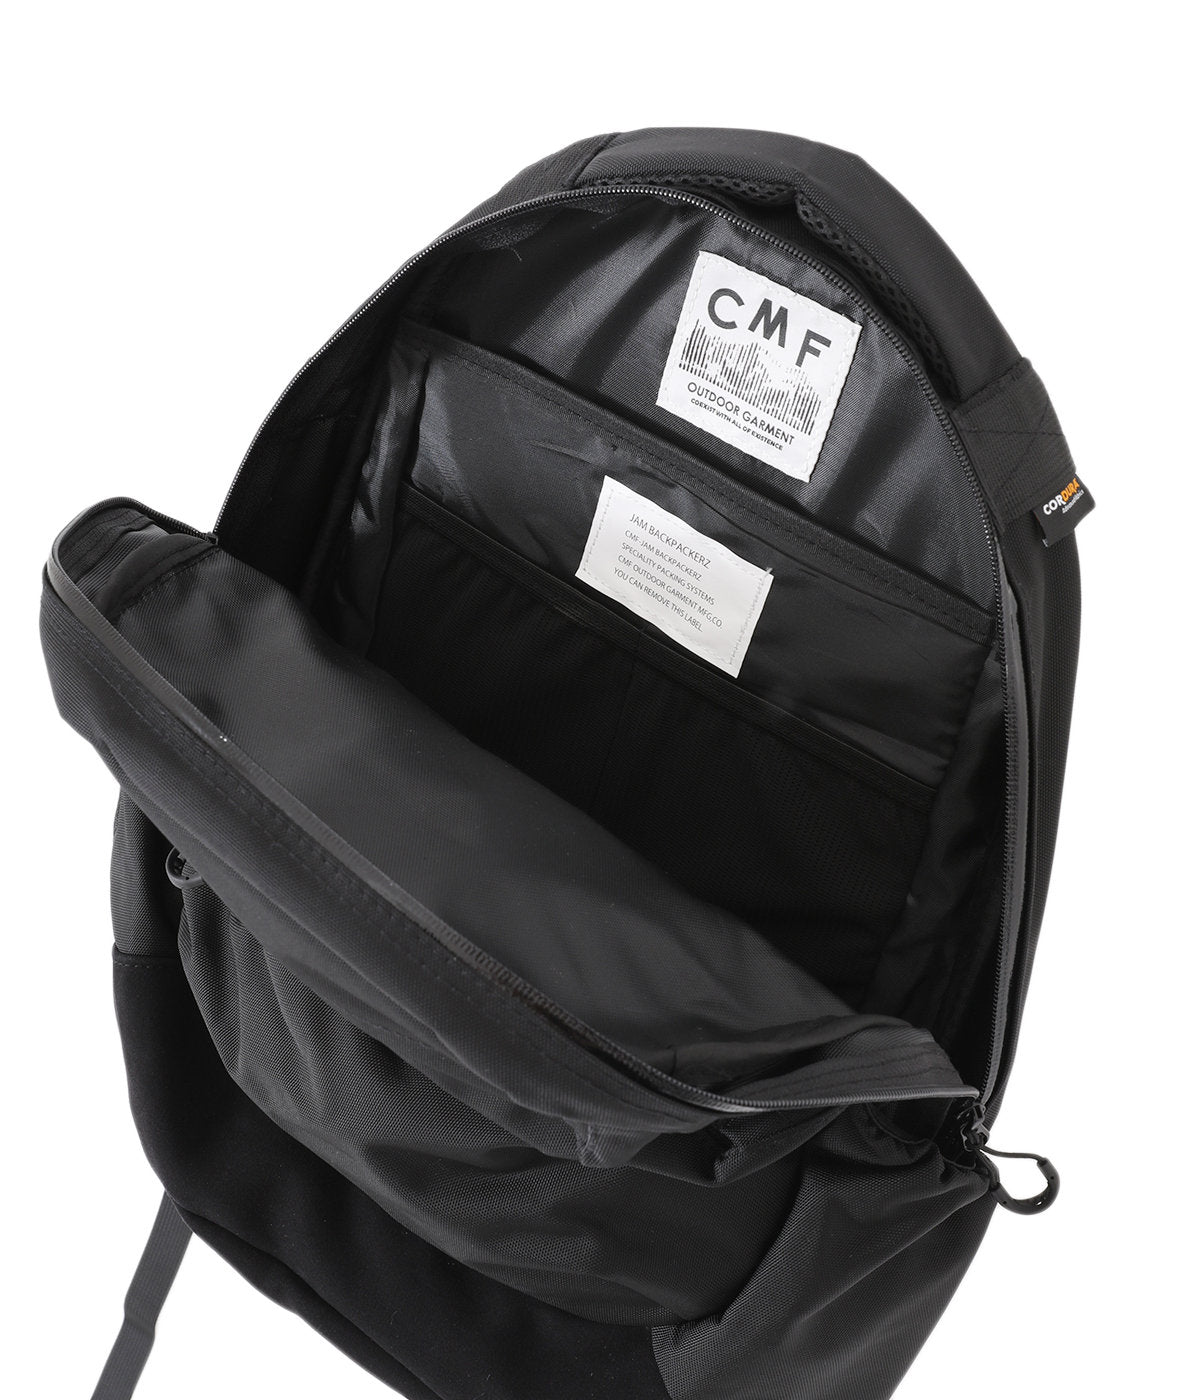 CMF outdoor garments jam backpack